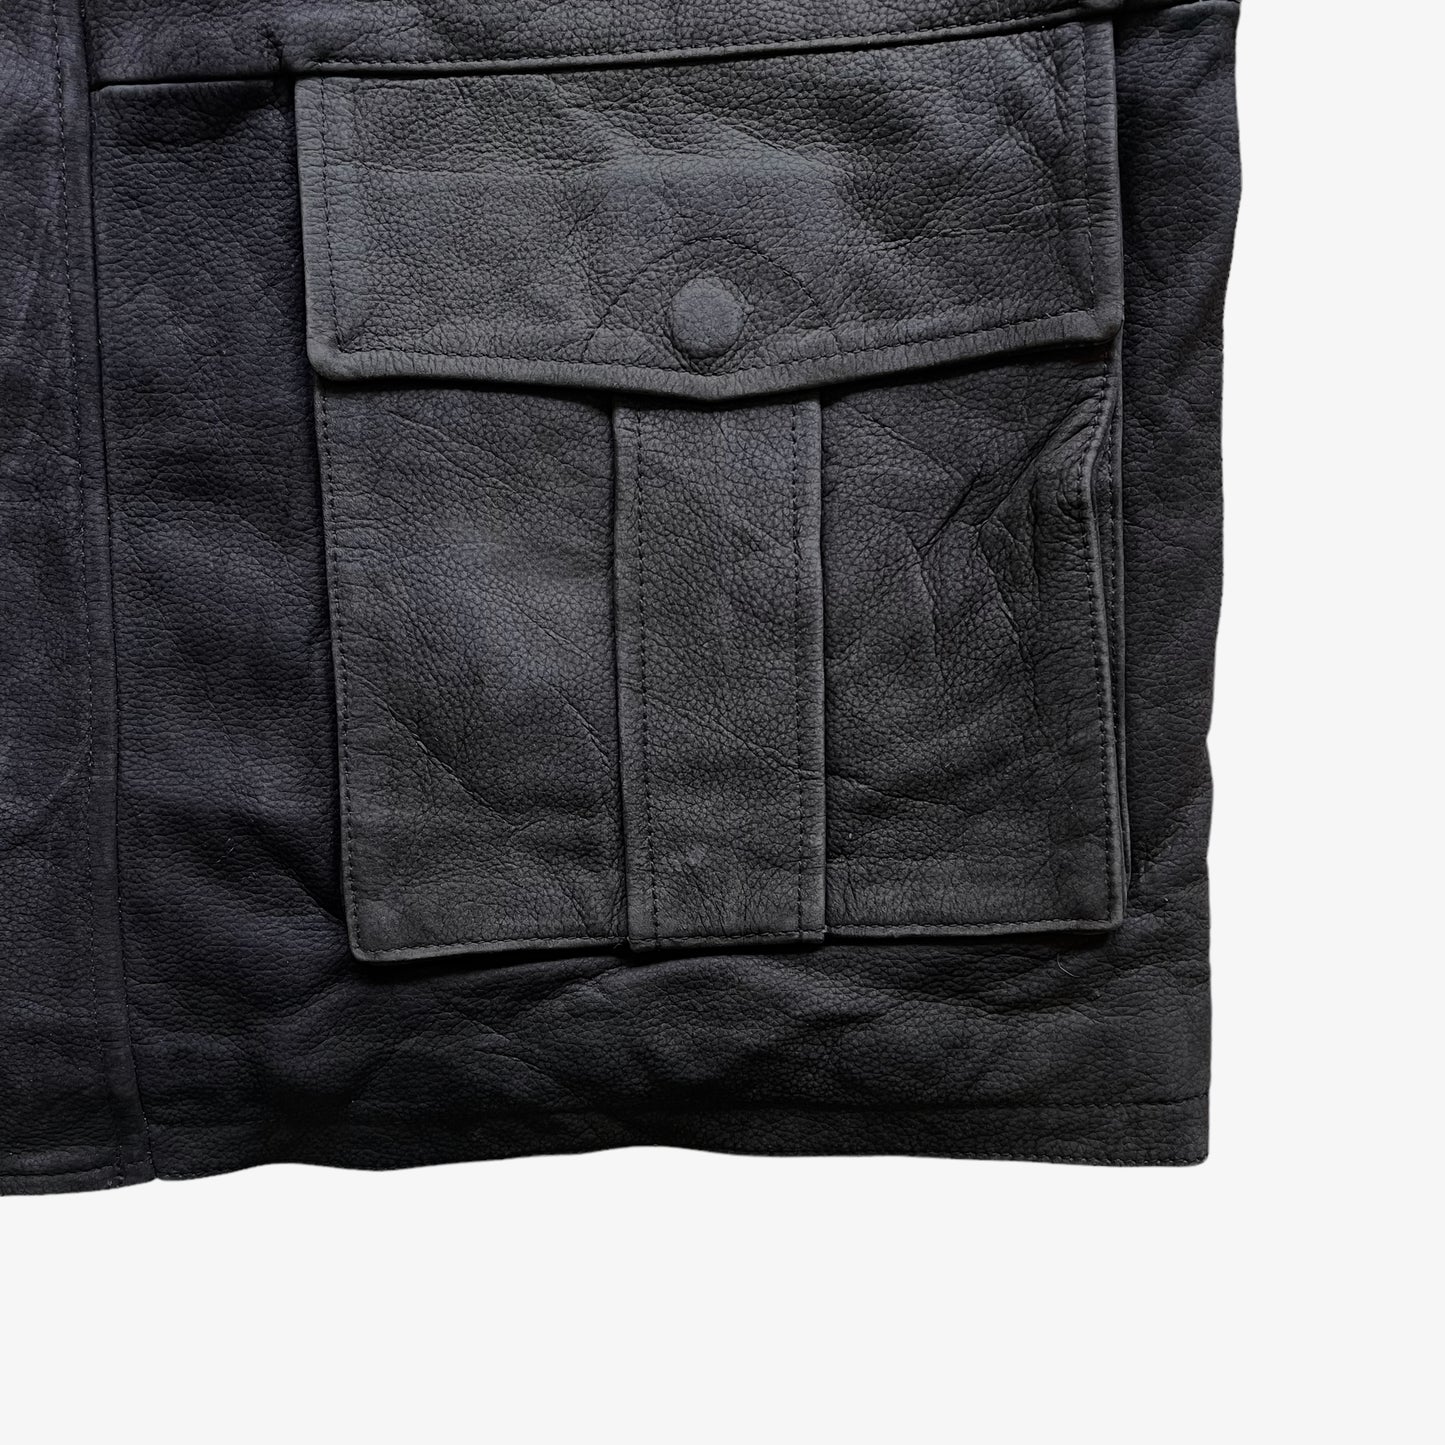 Vintage 90s AVIREX Leather Military Grade Jacket Pocket- Casspios Dream